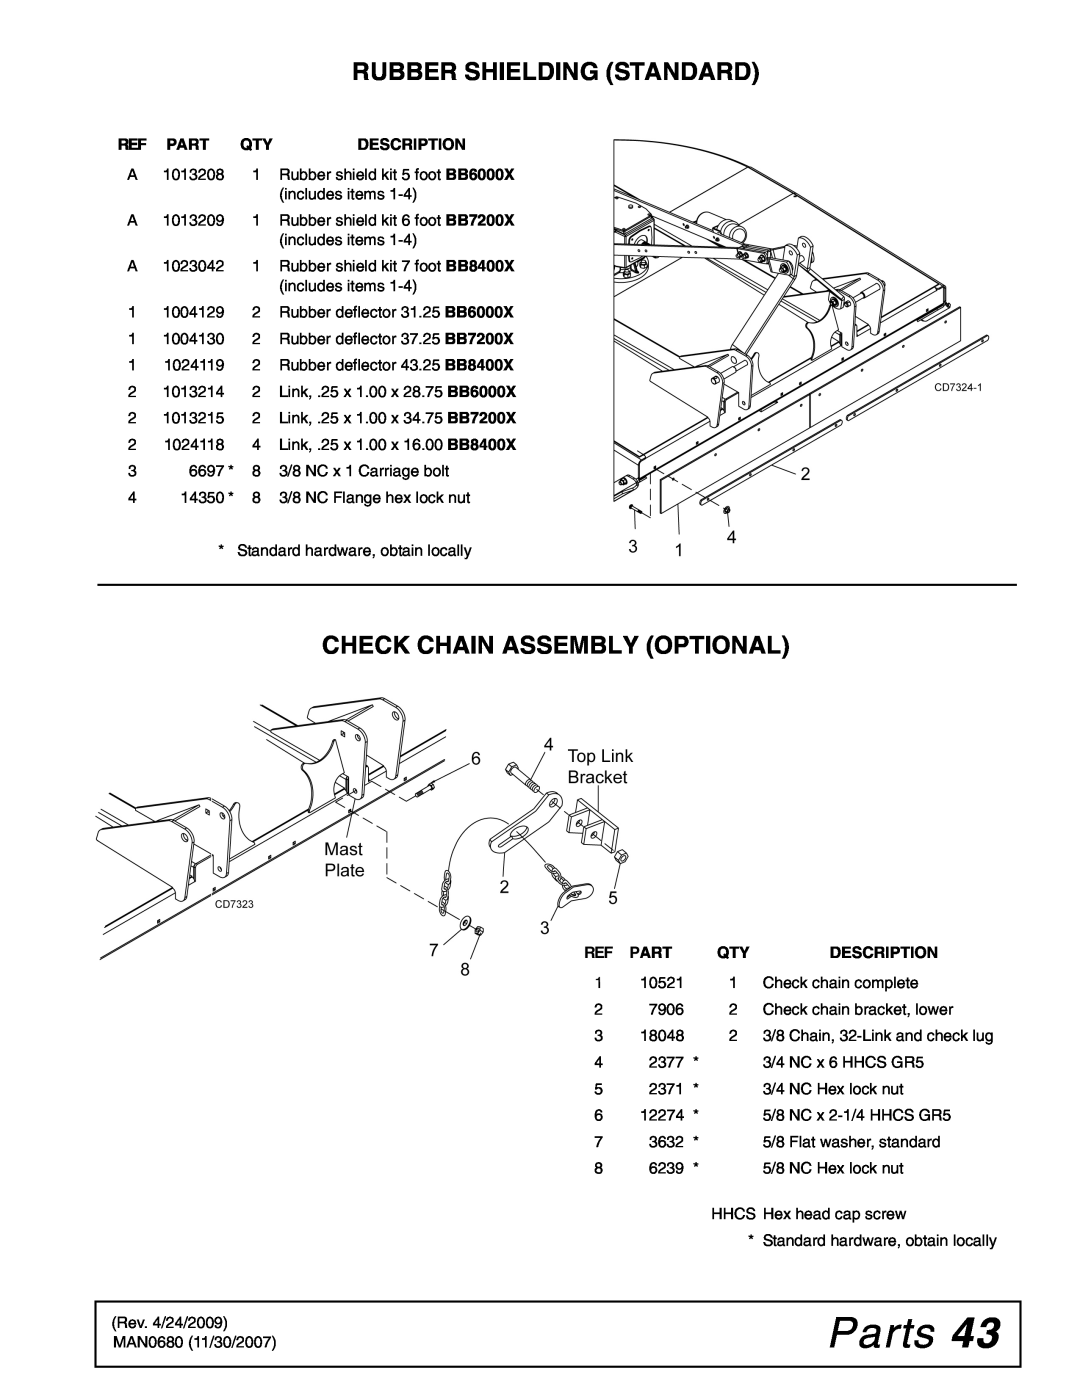 Woods Equipment BB6000X, MAN0680, BB7200X, BB8400X manual Parts, Check Chain Assembly Optional, Rubber Shielding Standard 